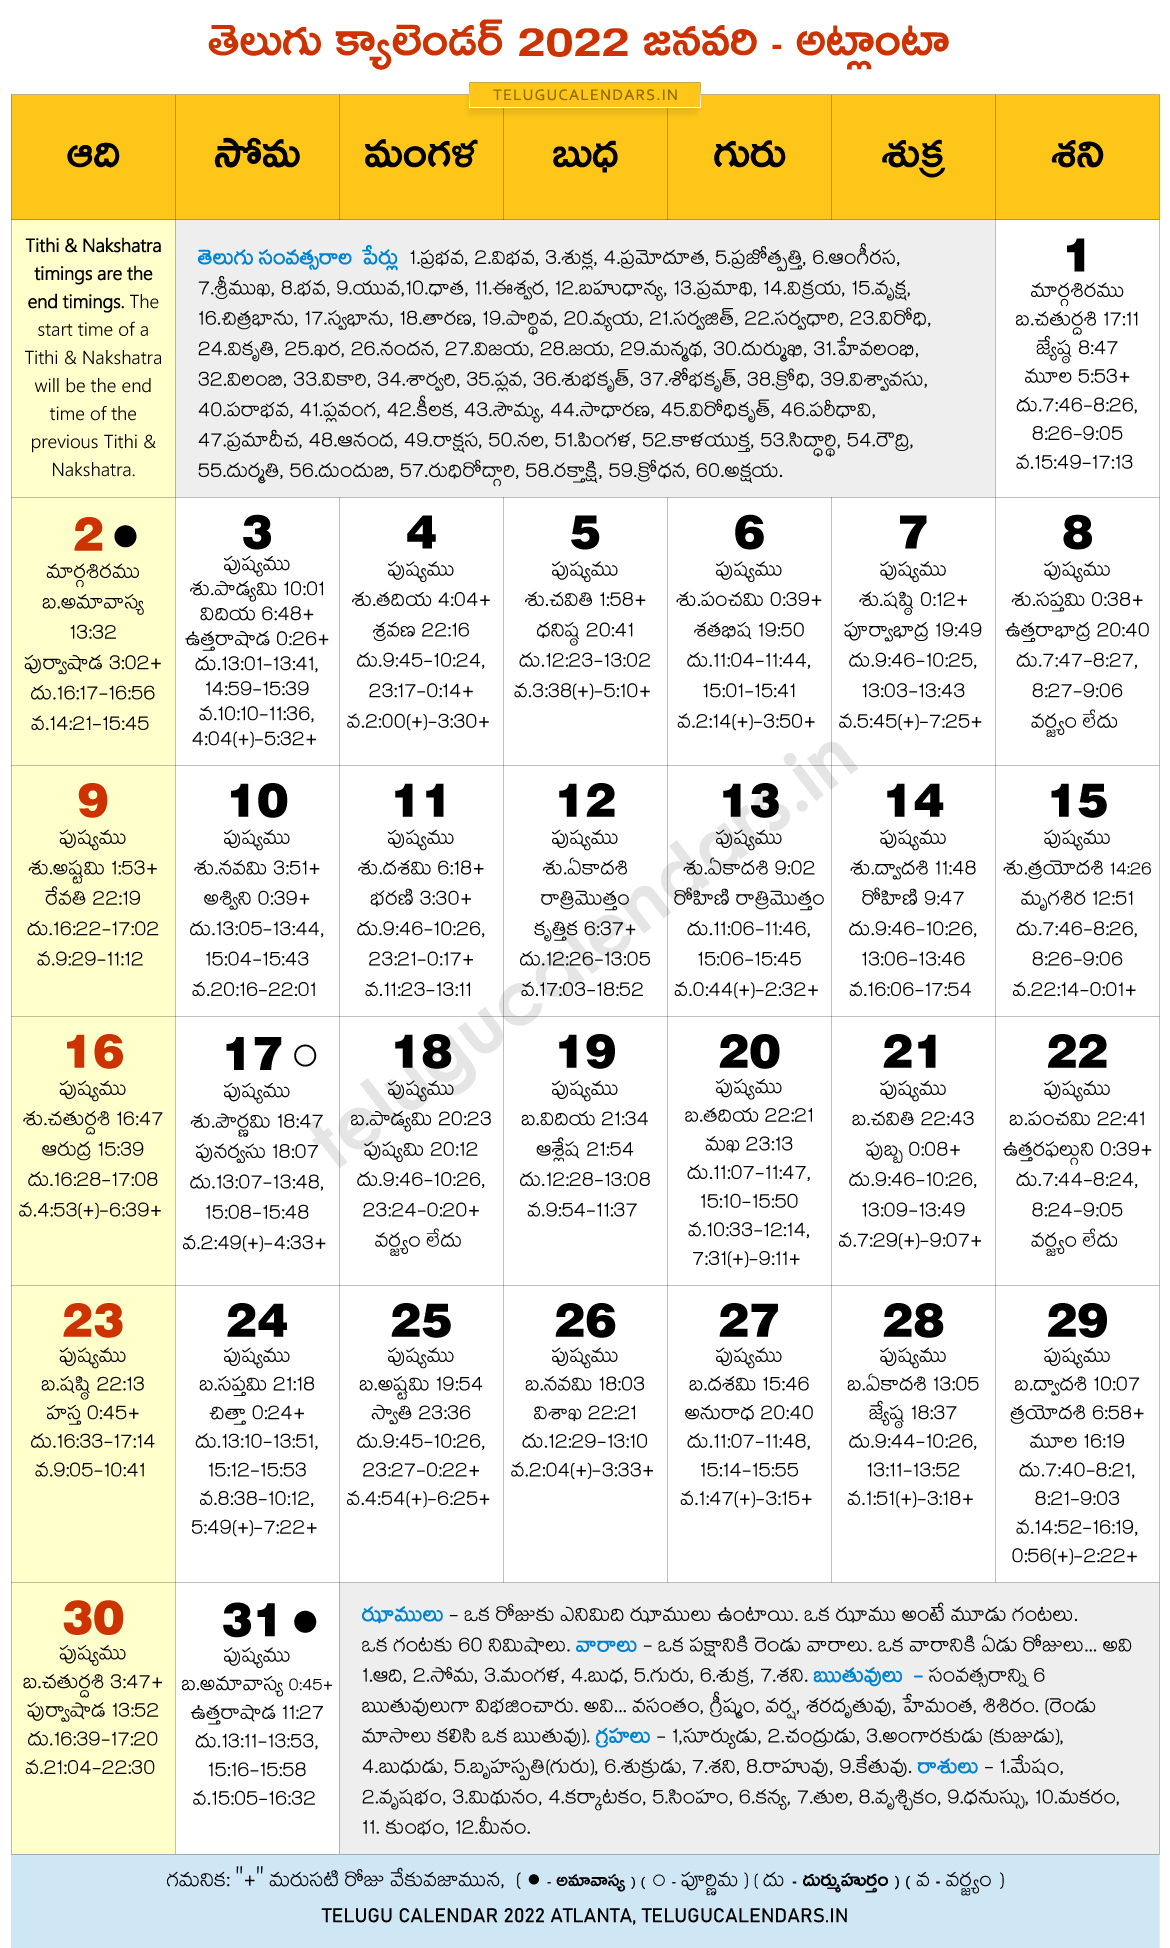 Atlanta Telugu Calendar 2022 - April 2022 Calendar  Telugu Calendar 2022 Pdf